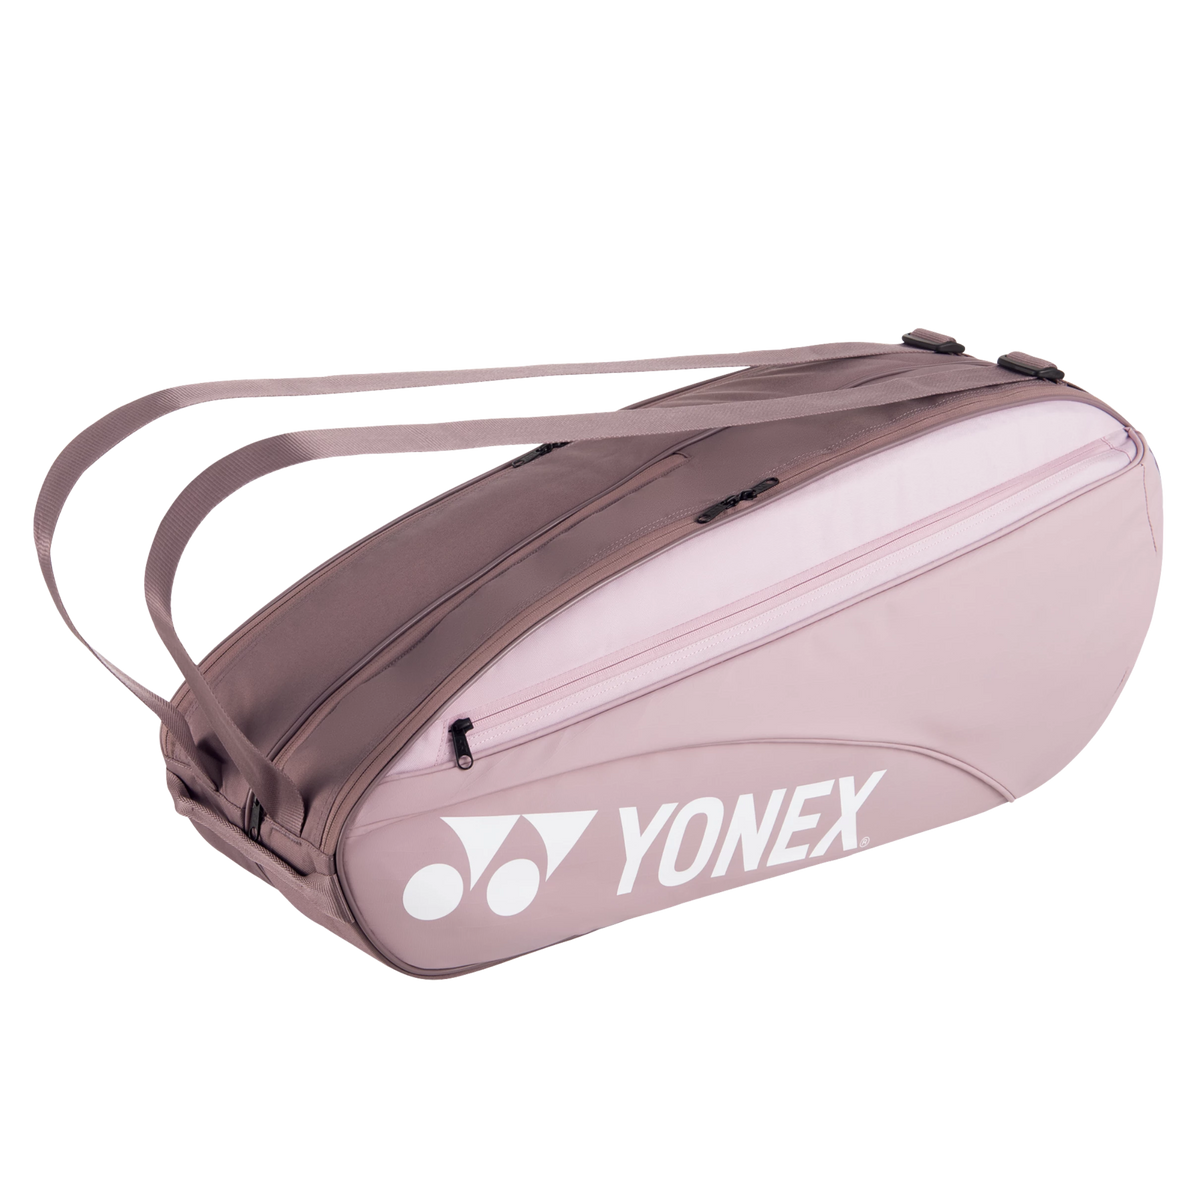 Yonex Racketbag 42326 pink